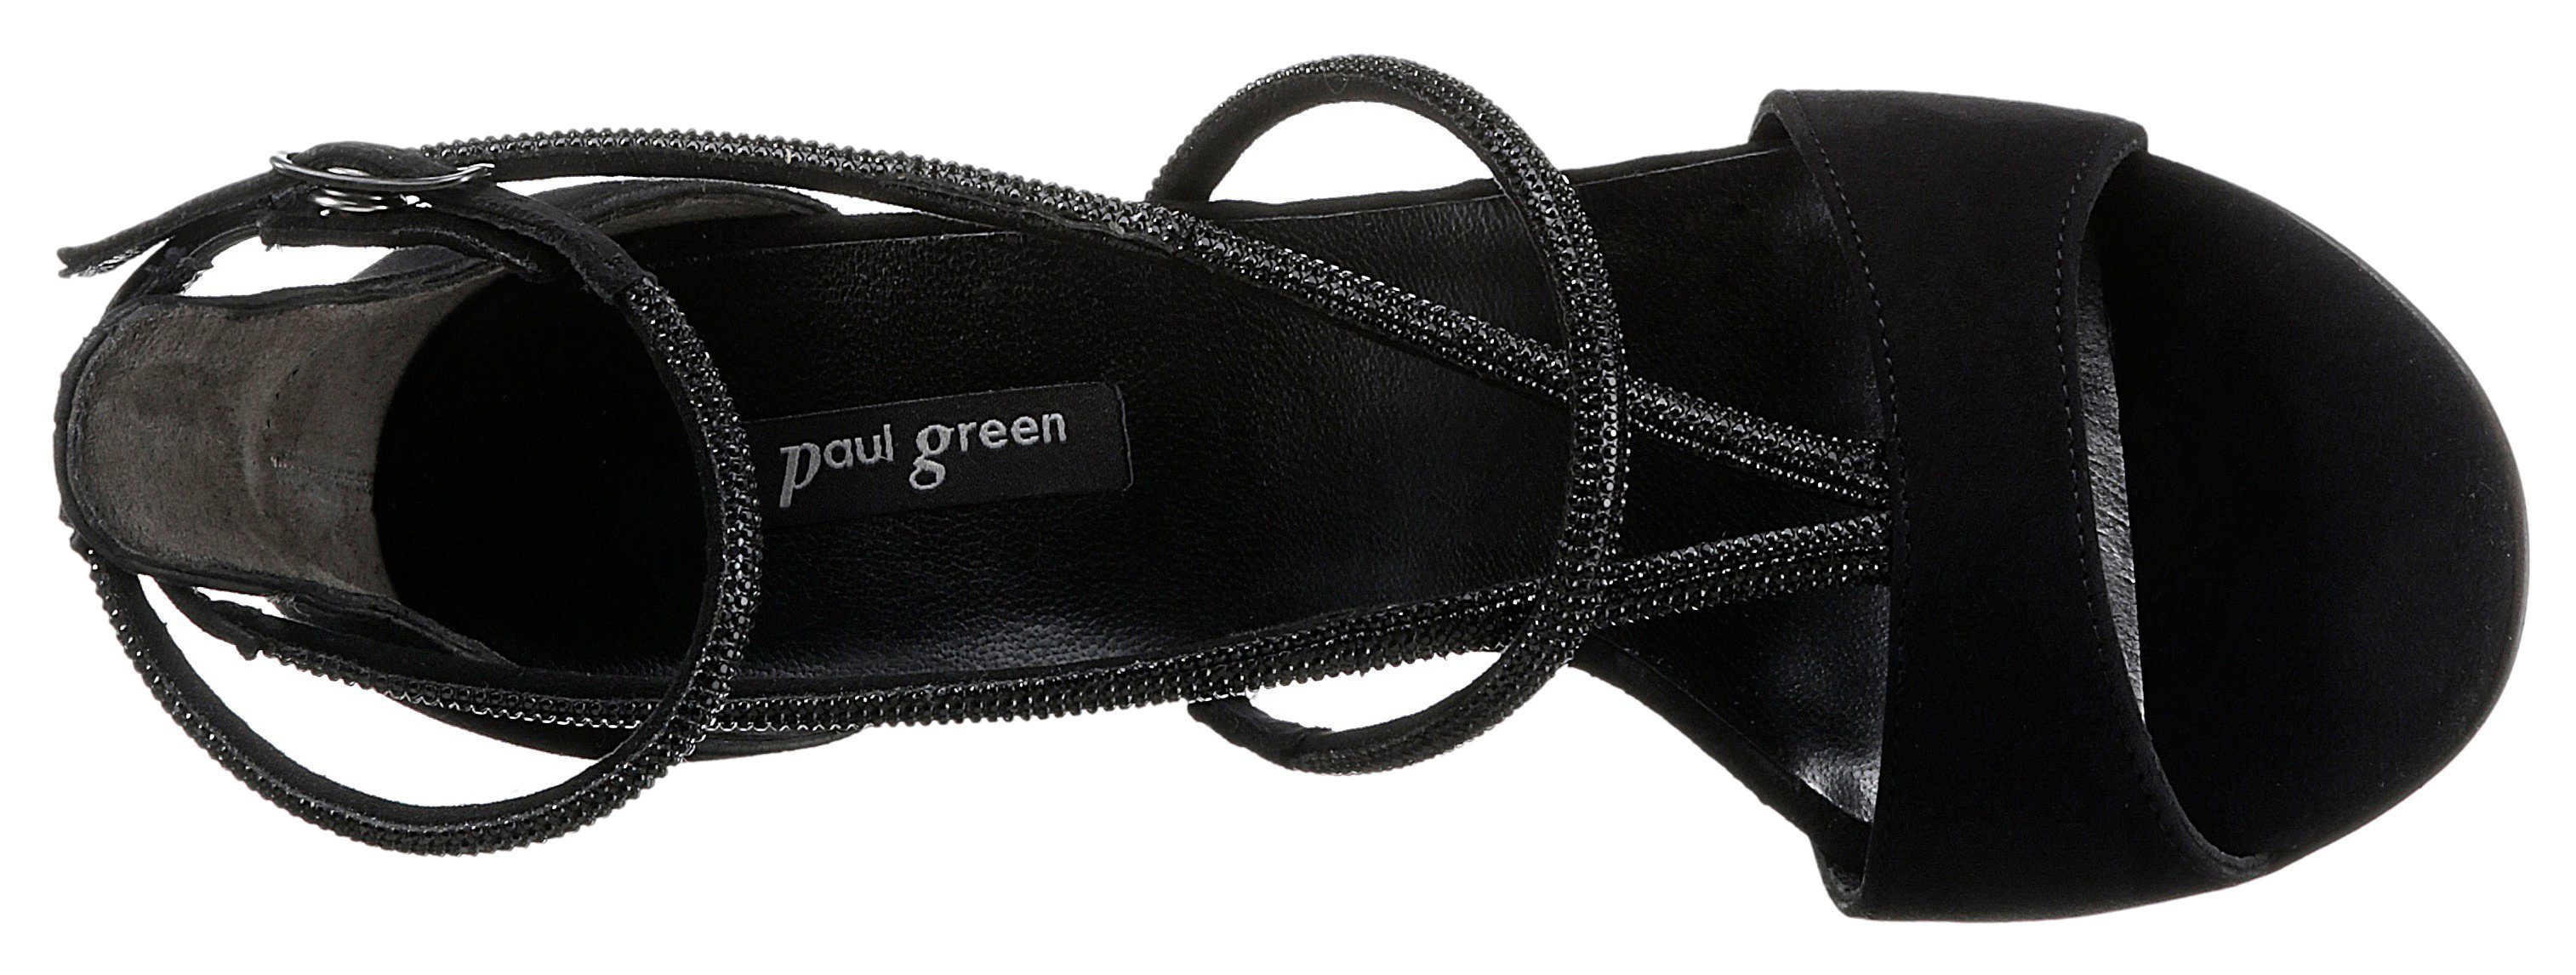 Green schwarz Paul eleganter Sandalette Optik in